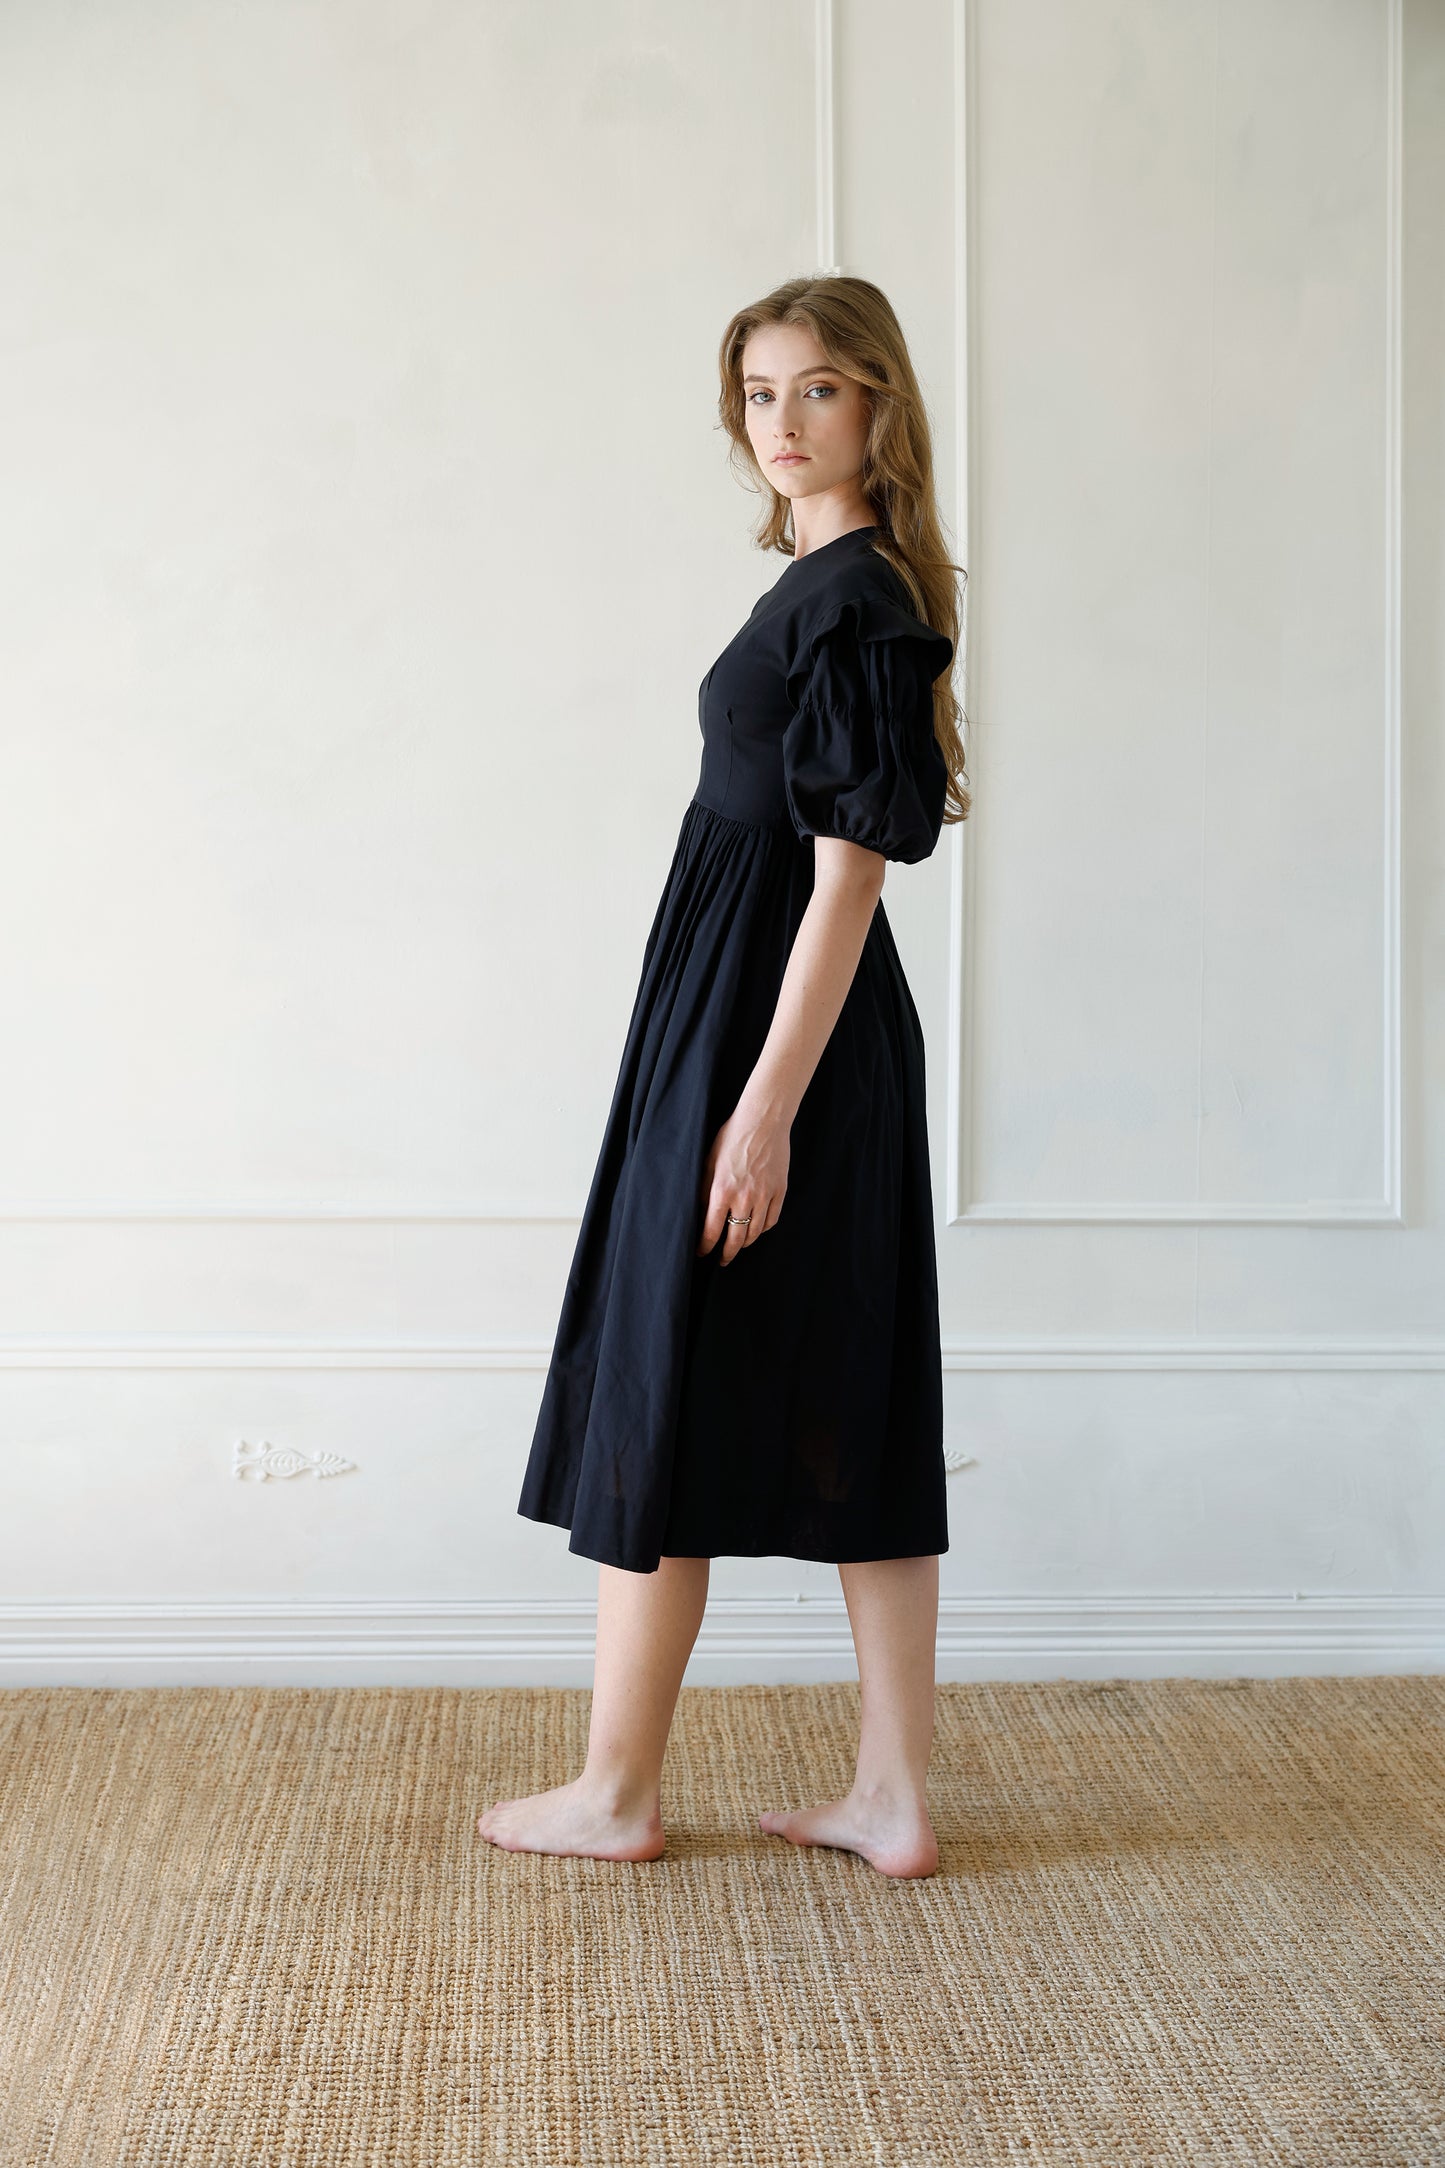 Ophelia dress in black cotton